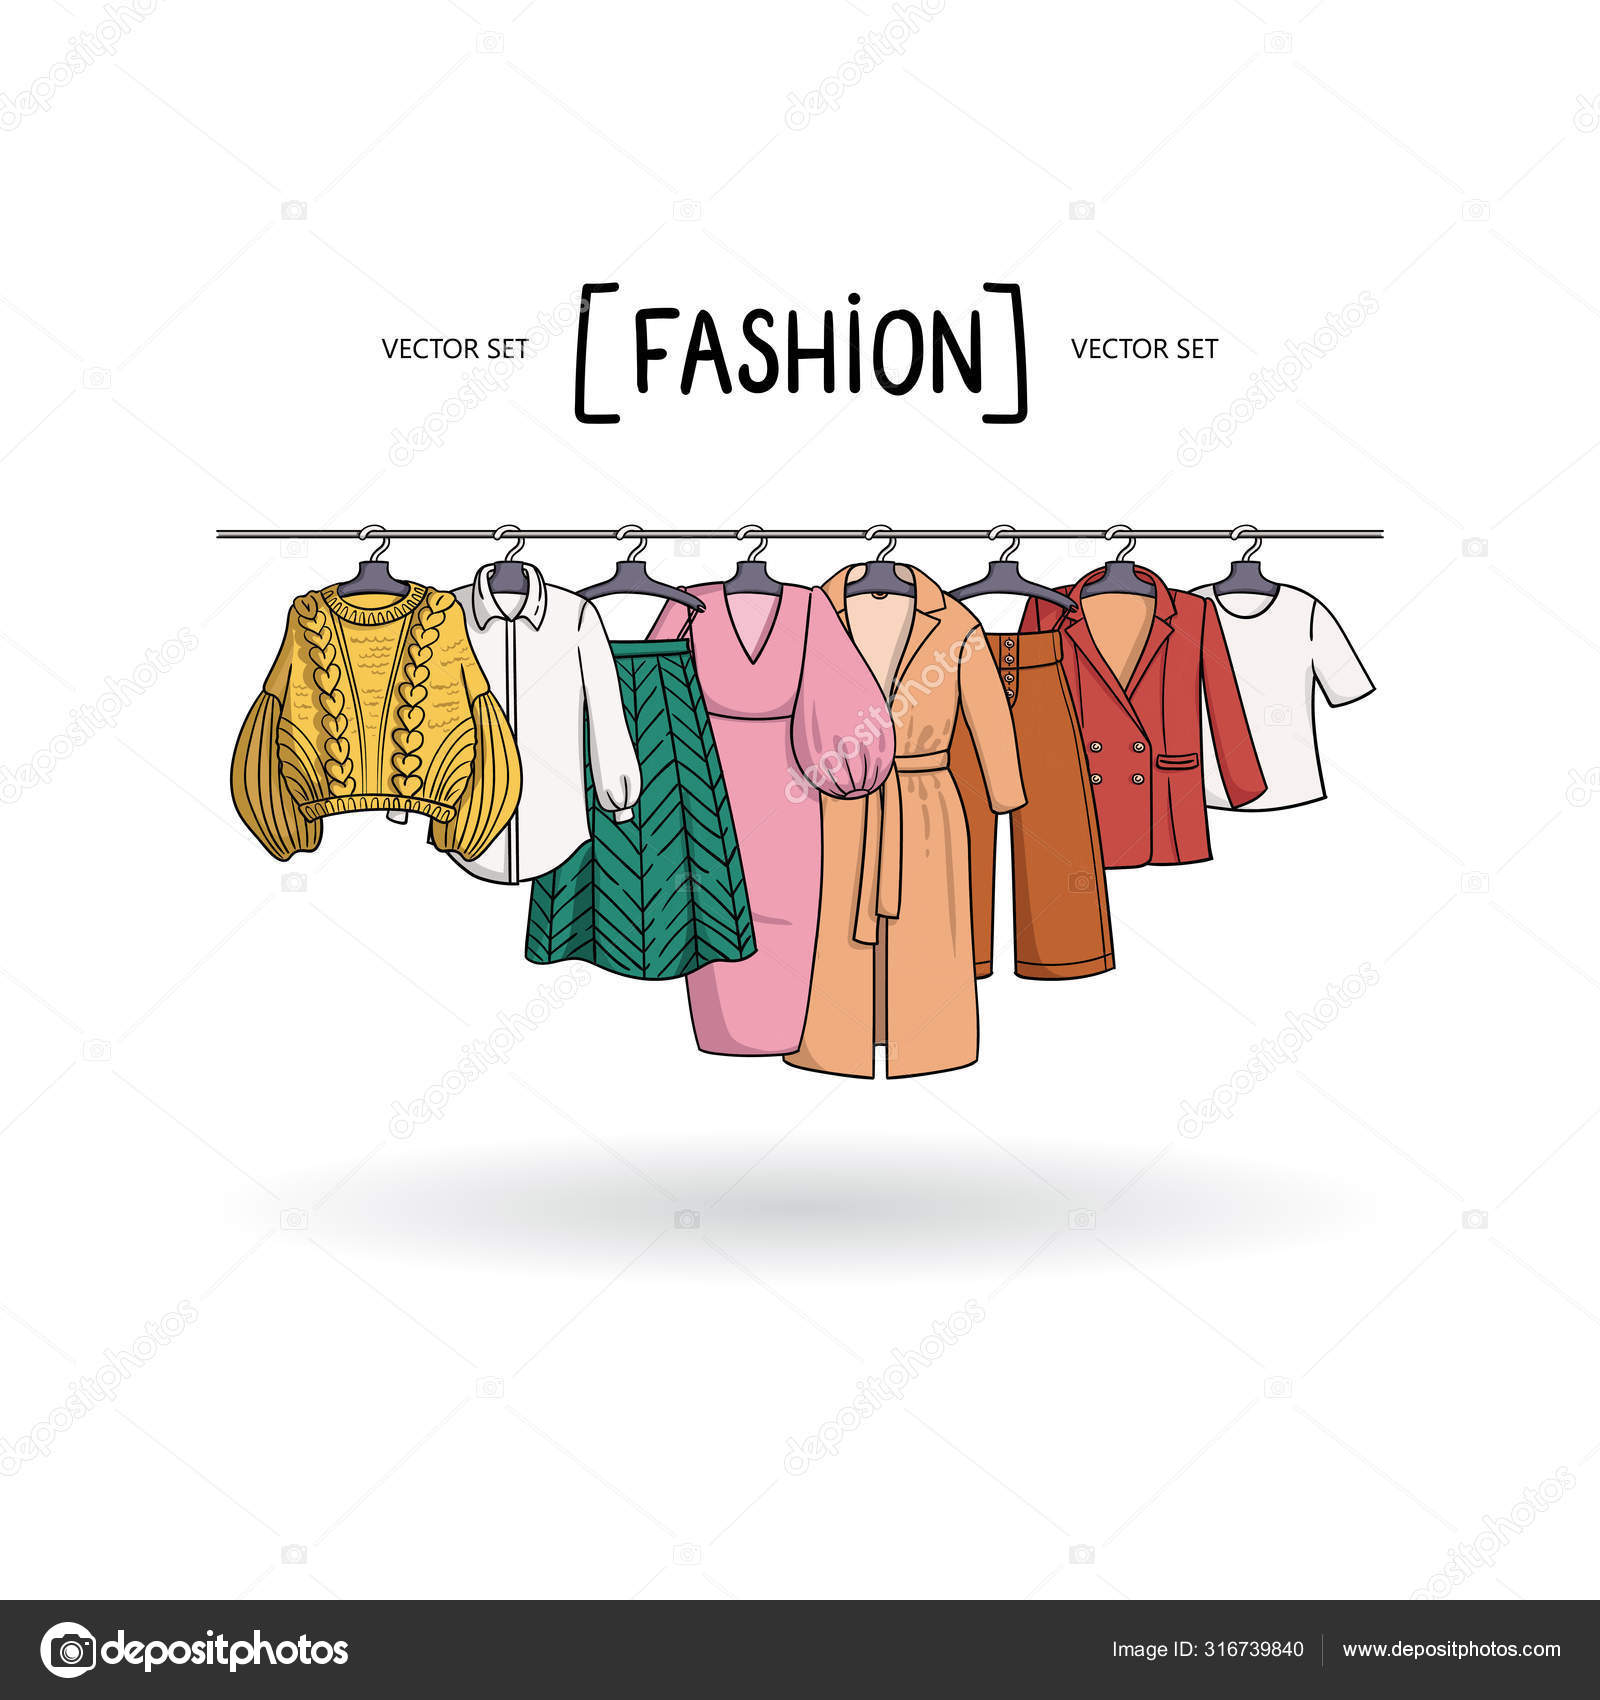 https://st3.depositphotos.com/3283585/31673/v/1600/depositphotos_316739840-stock-illustration-vector-illustration-fashionable-clothes-women.jpg